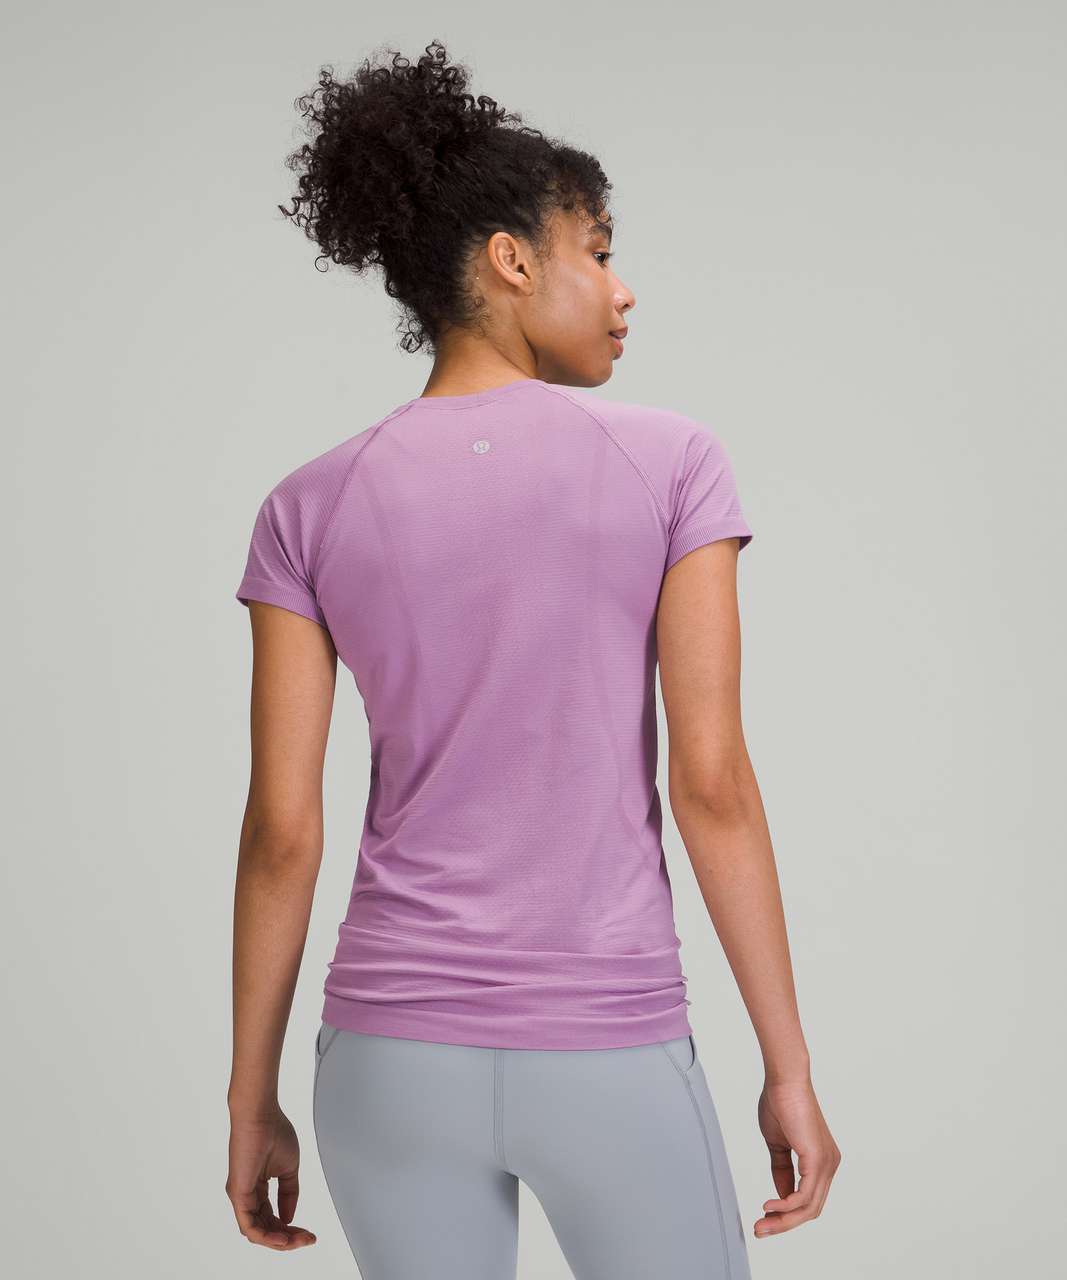 Lululemon Swiftly Tech Short Sleeve Shirt 2.0 - Wisteria Purple